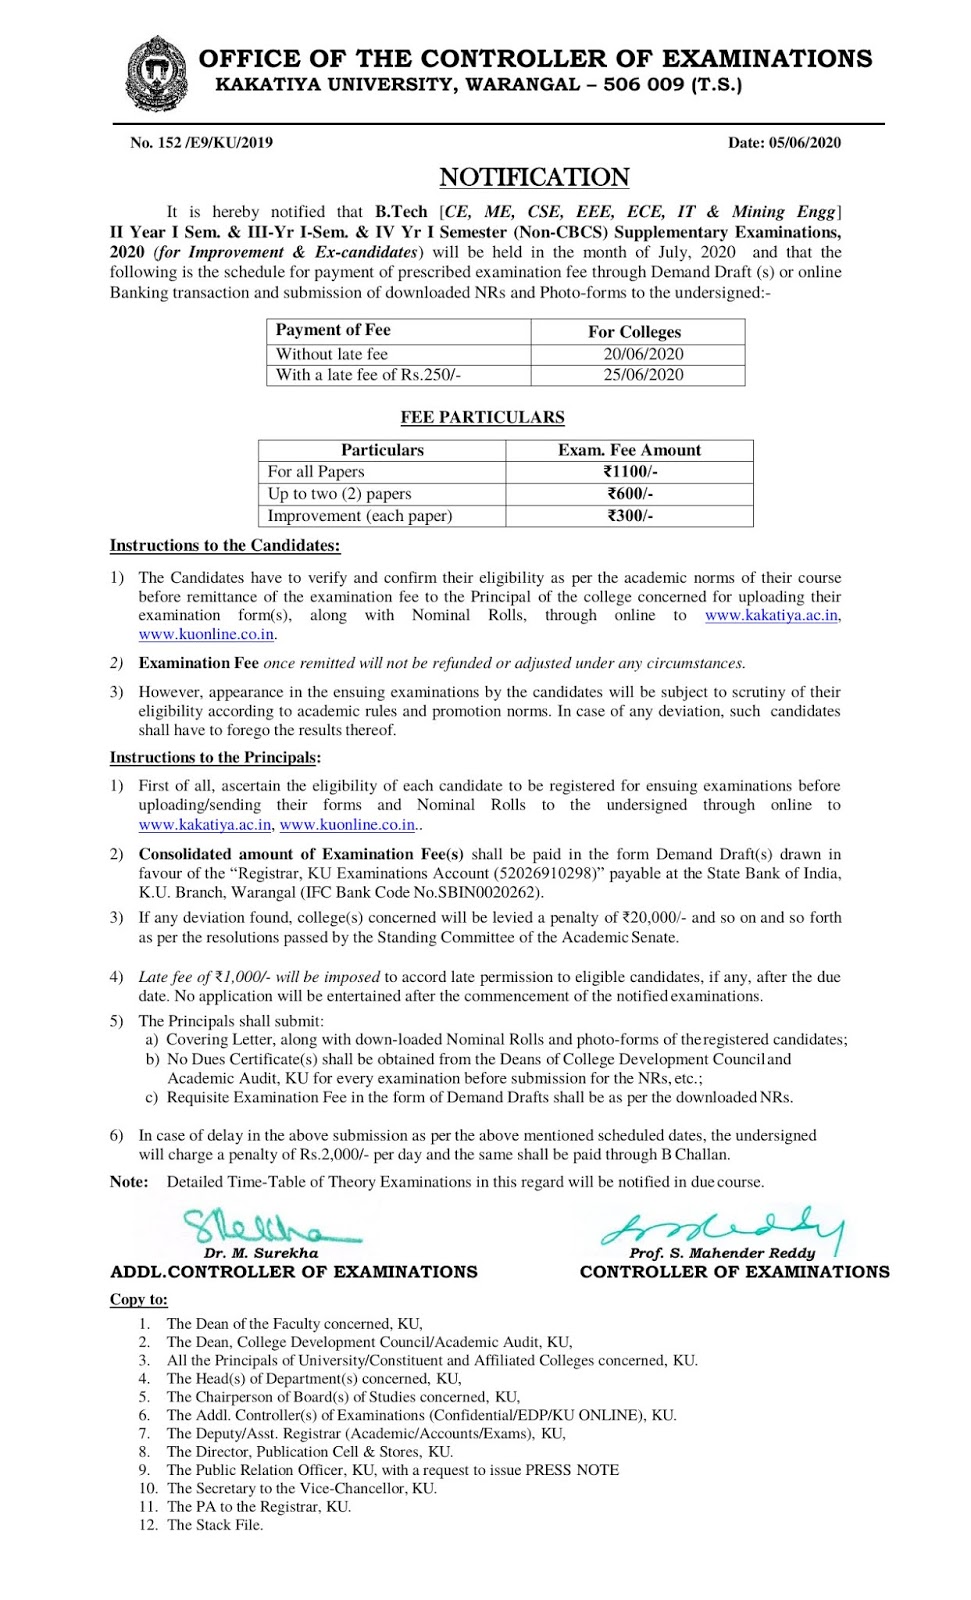 kakatiya university b.tech 2nd to 4th year 1st sem non-cbcs june 2020 fee notification